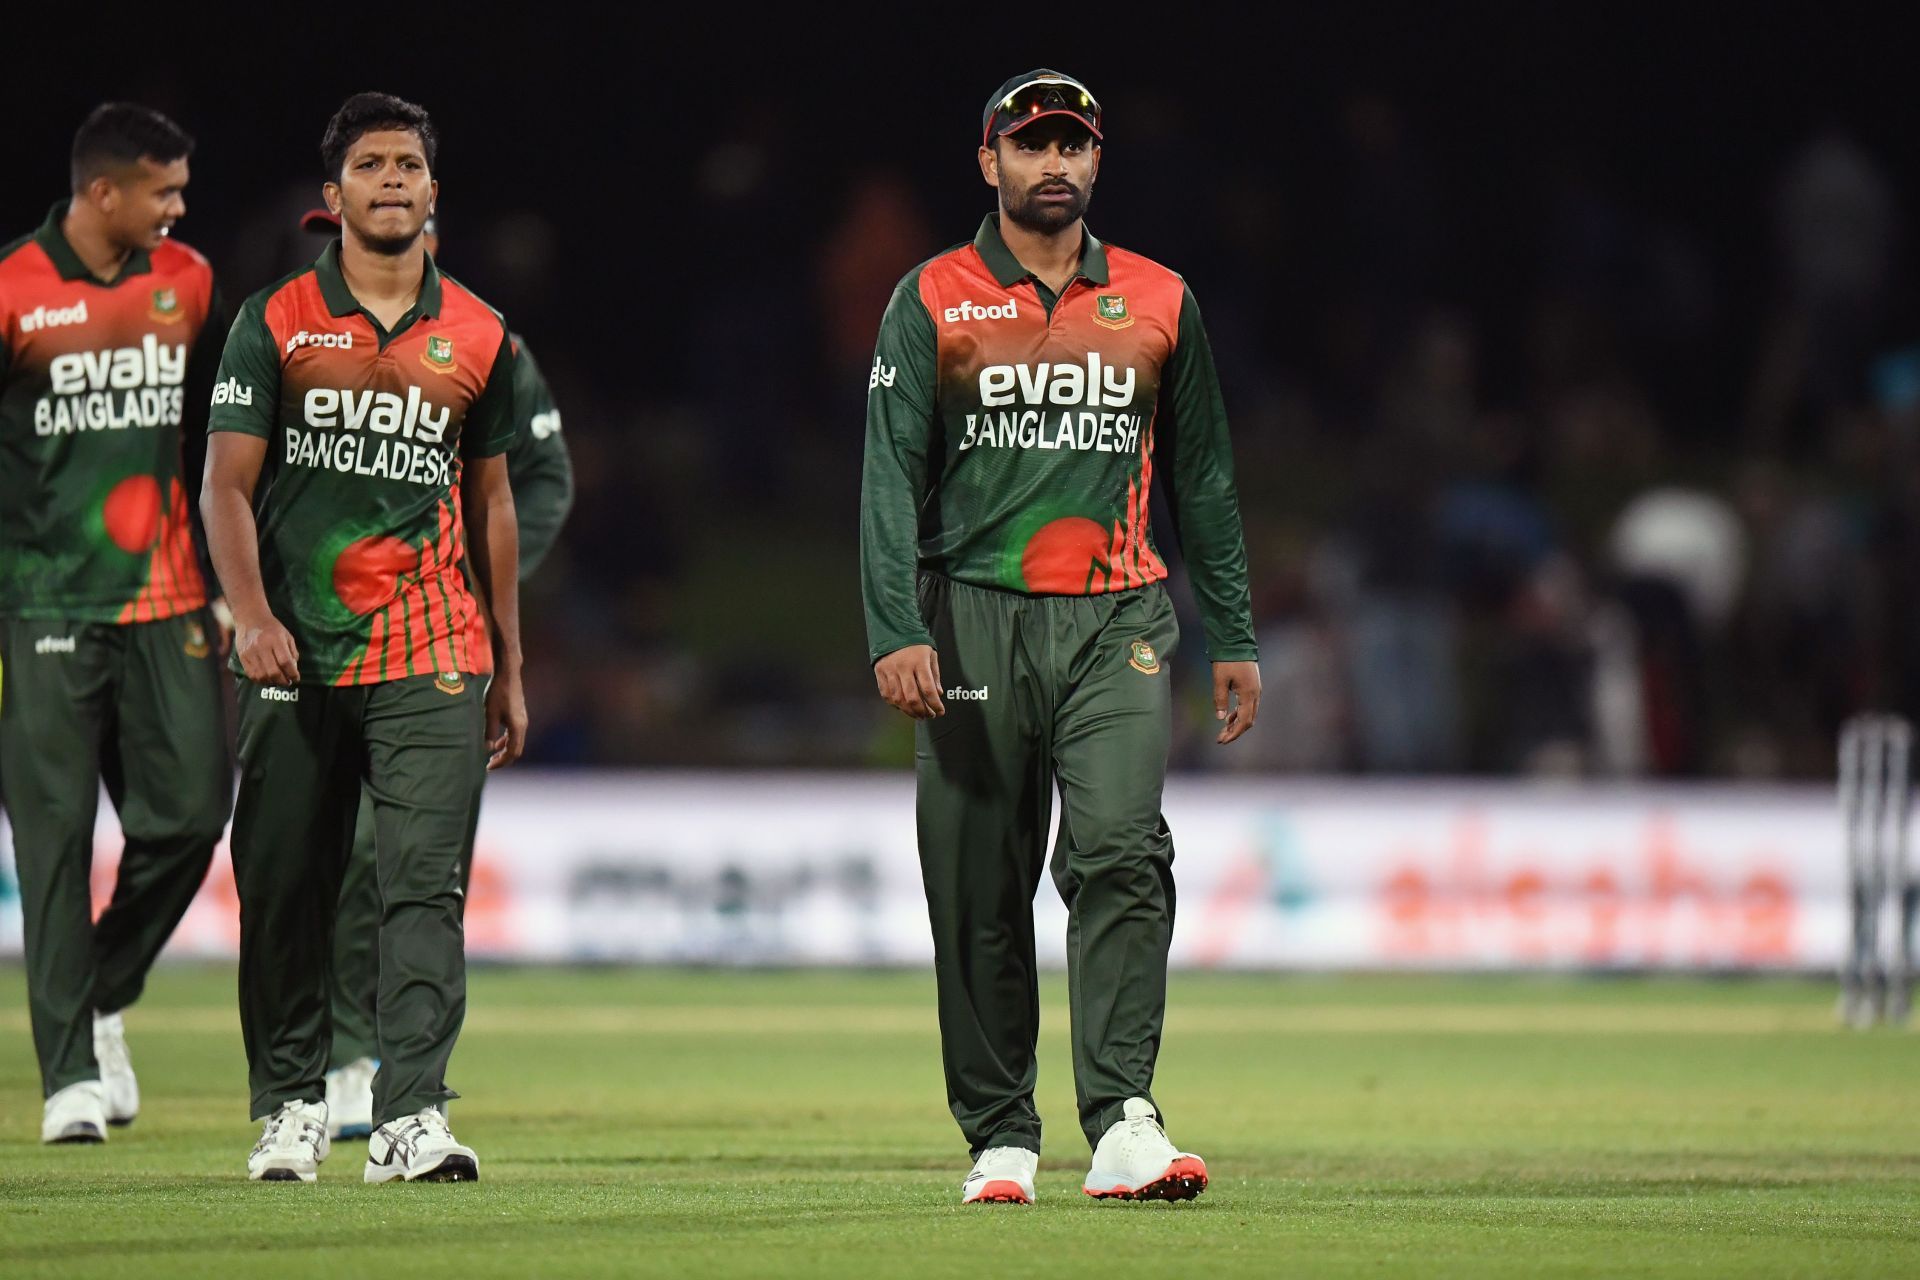 New Zealand v Bangladesh - ODI Game 2 (Image courtesy: Getty)